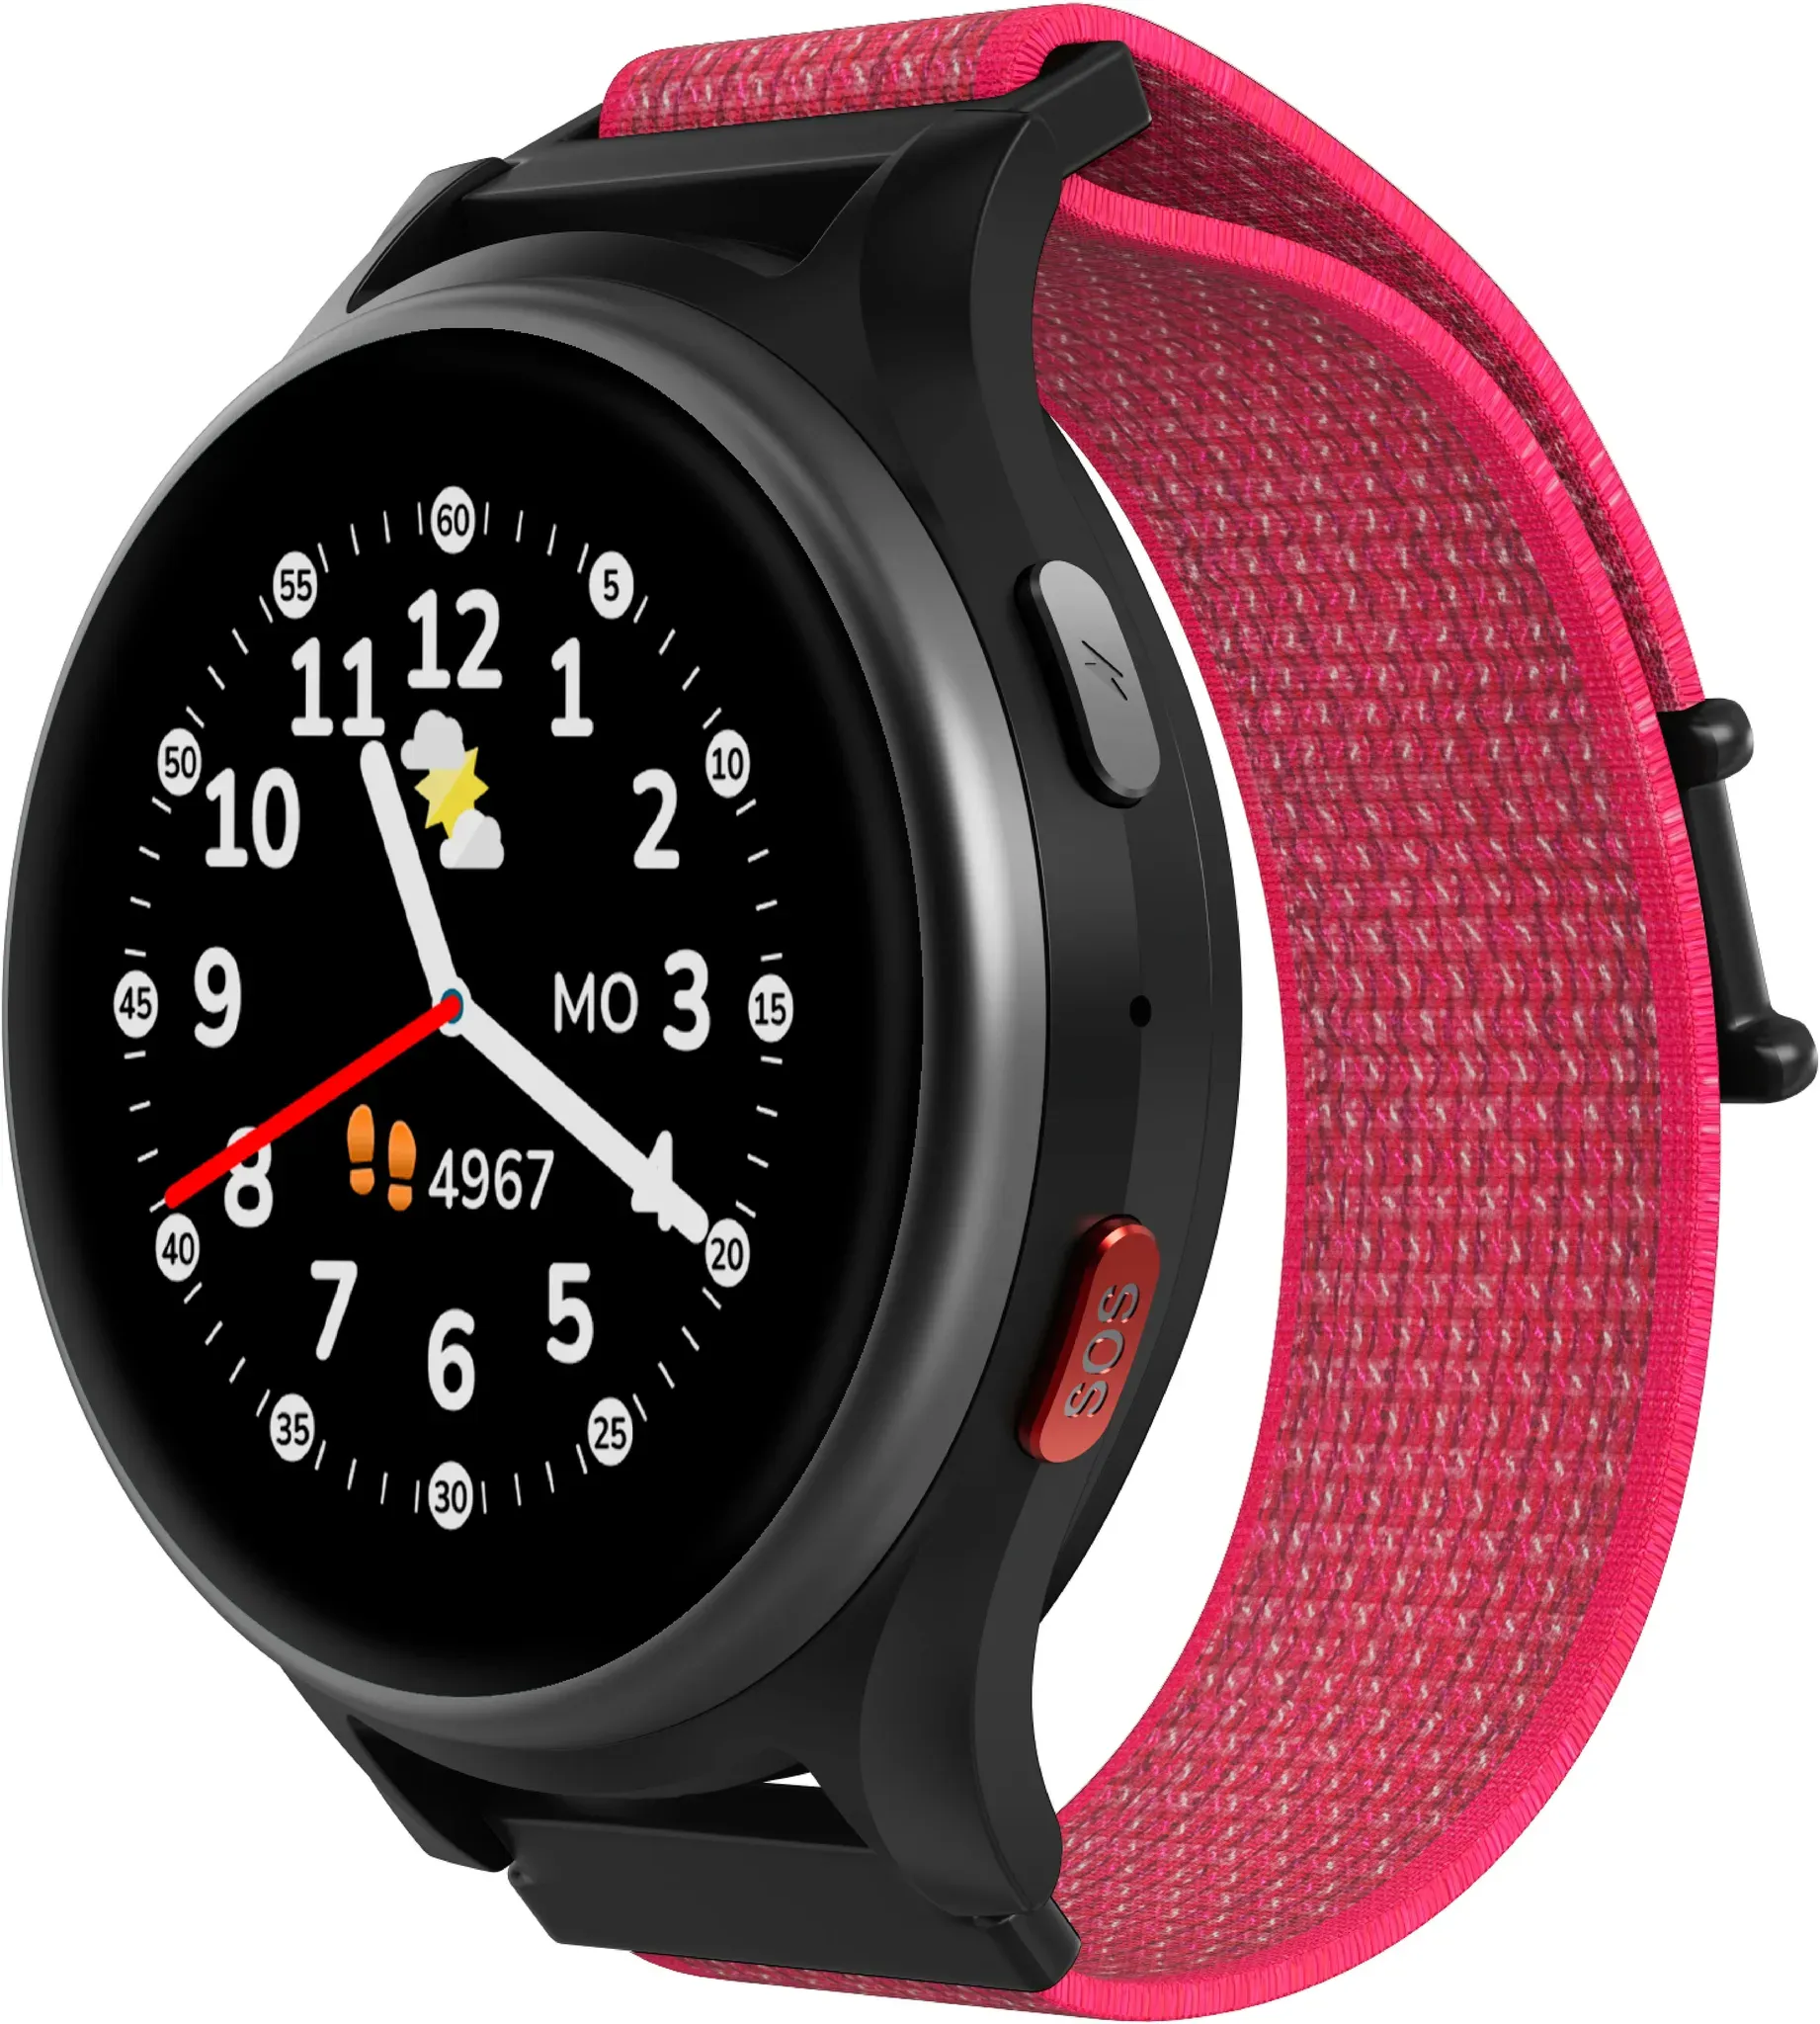 Smartwatch ANIO "6 Kinder inkl. congstar Prepaid-SIM" Smartwatches rosa Sonstiges Elektronikspielzeug